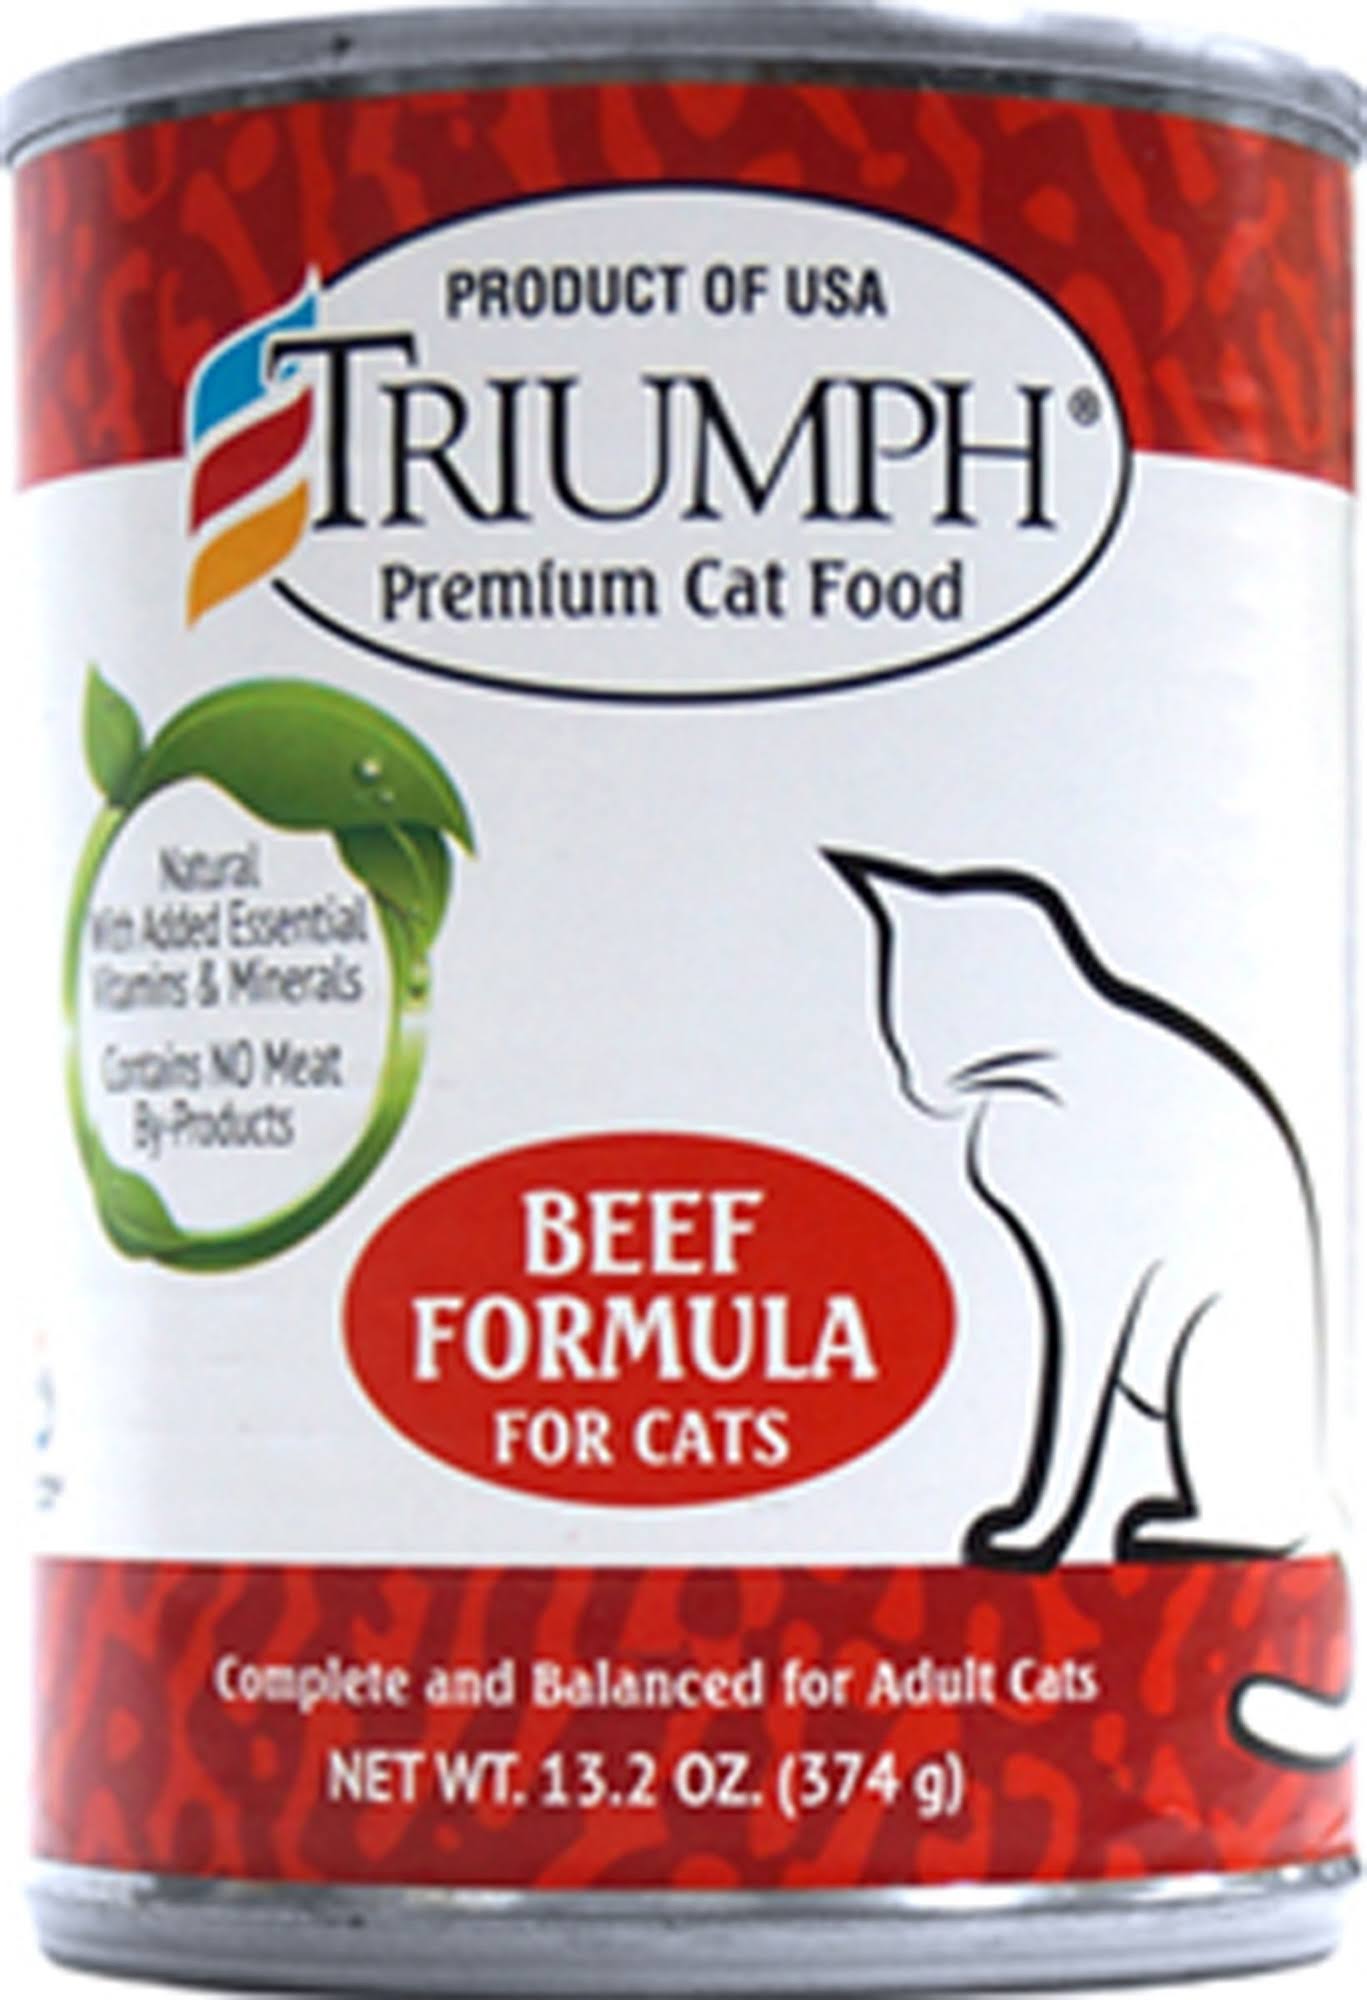 Triumph Cat Food - Beef Formula